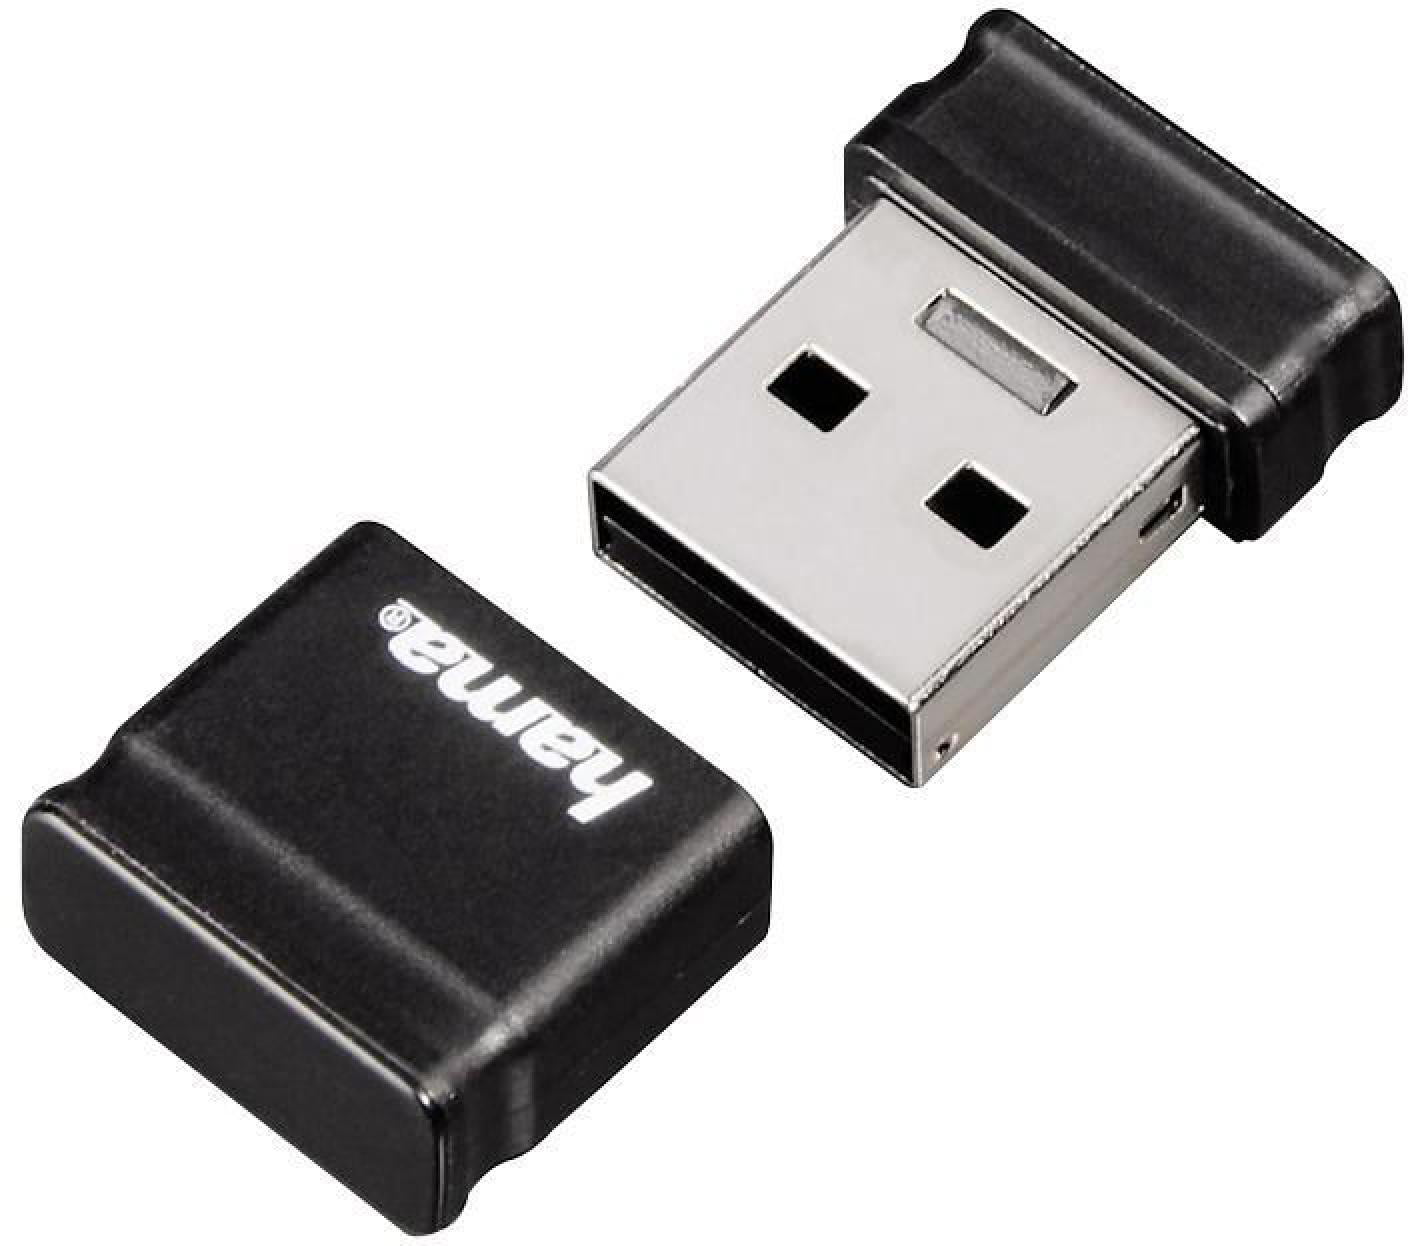 jord Tag fat Drejning HAMA - 8GB Smartly Compact USB 2.0 Flash Drive - 10 MB/s, Black -  Walmart.com